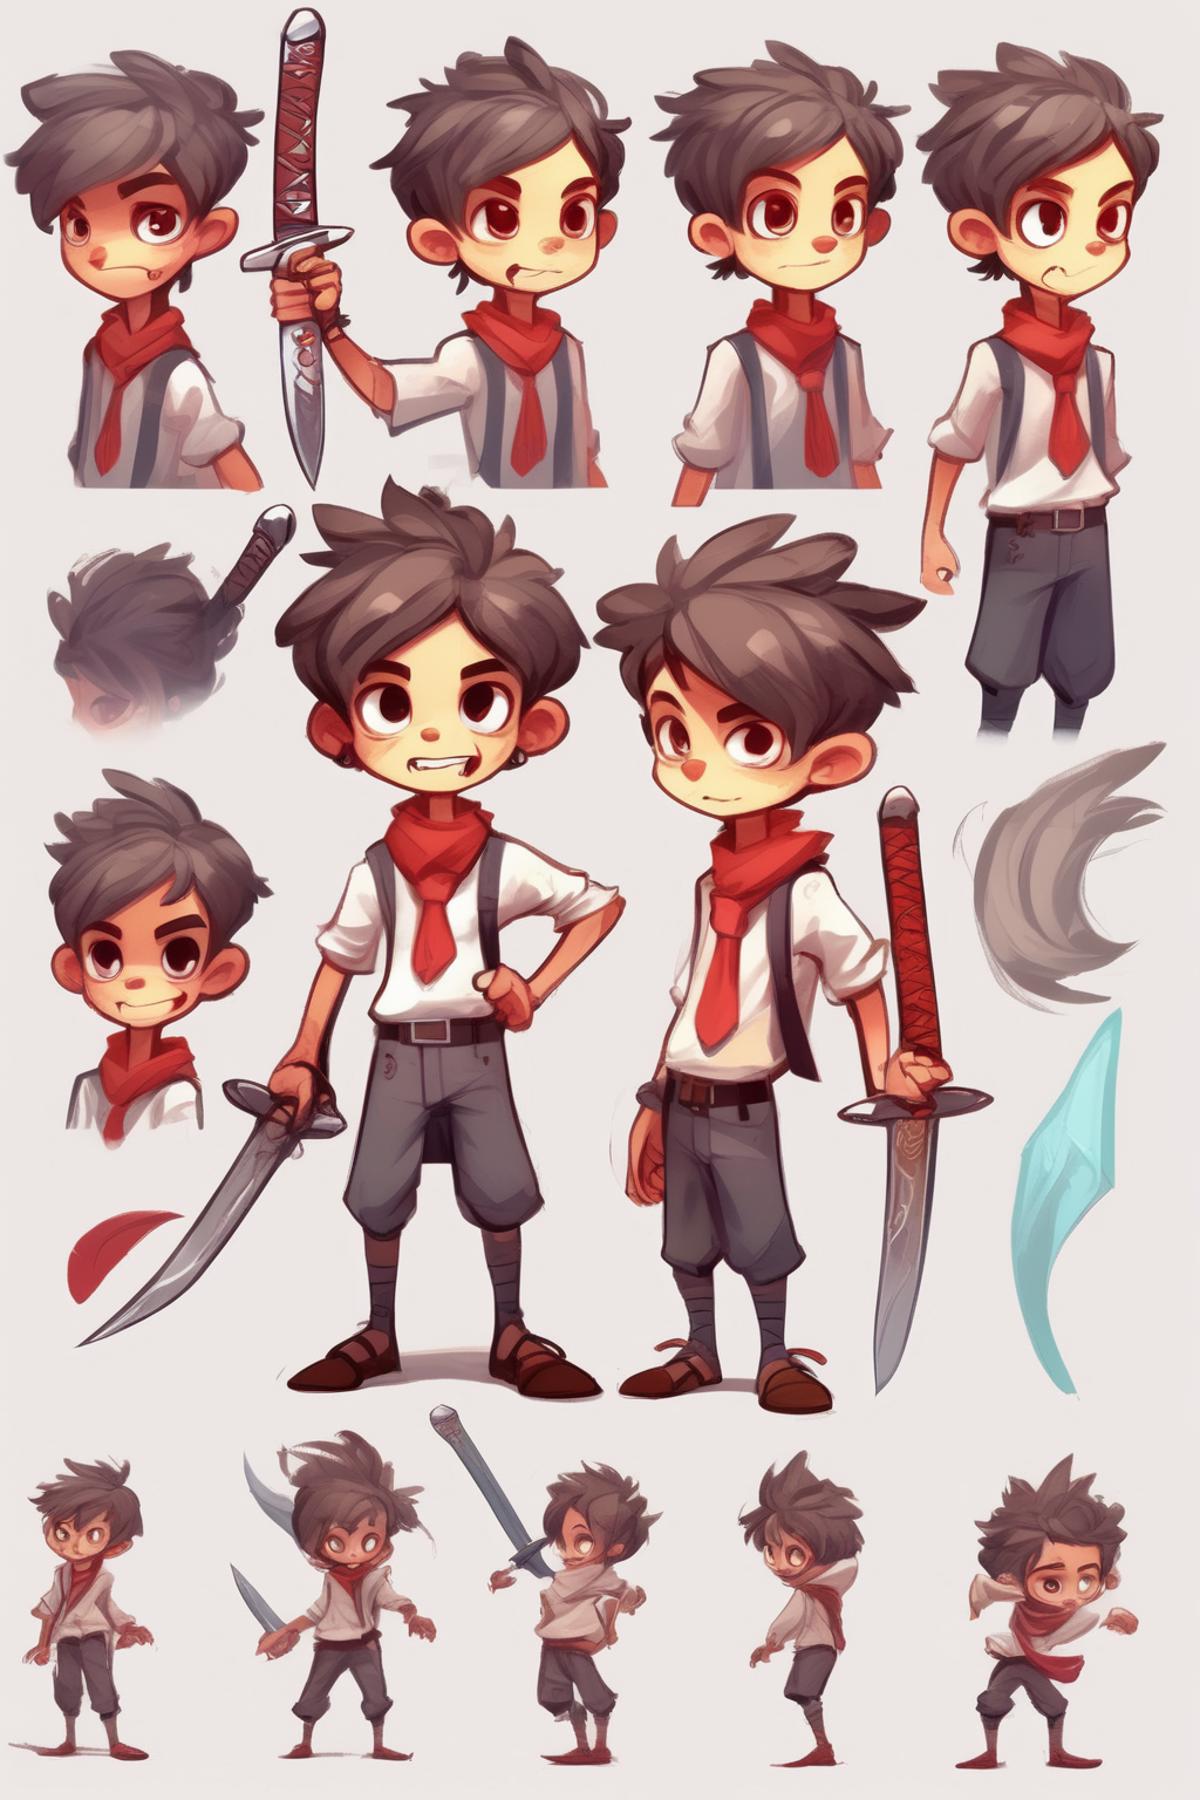 Character Design image by Kappa_Neuro